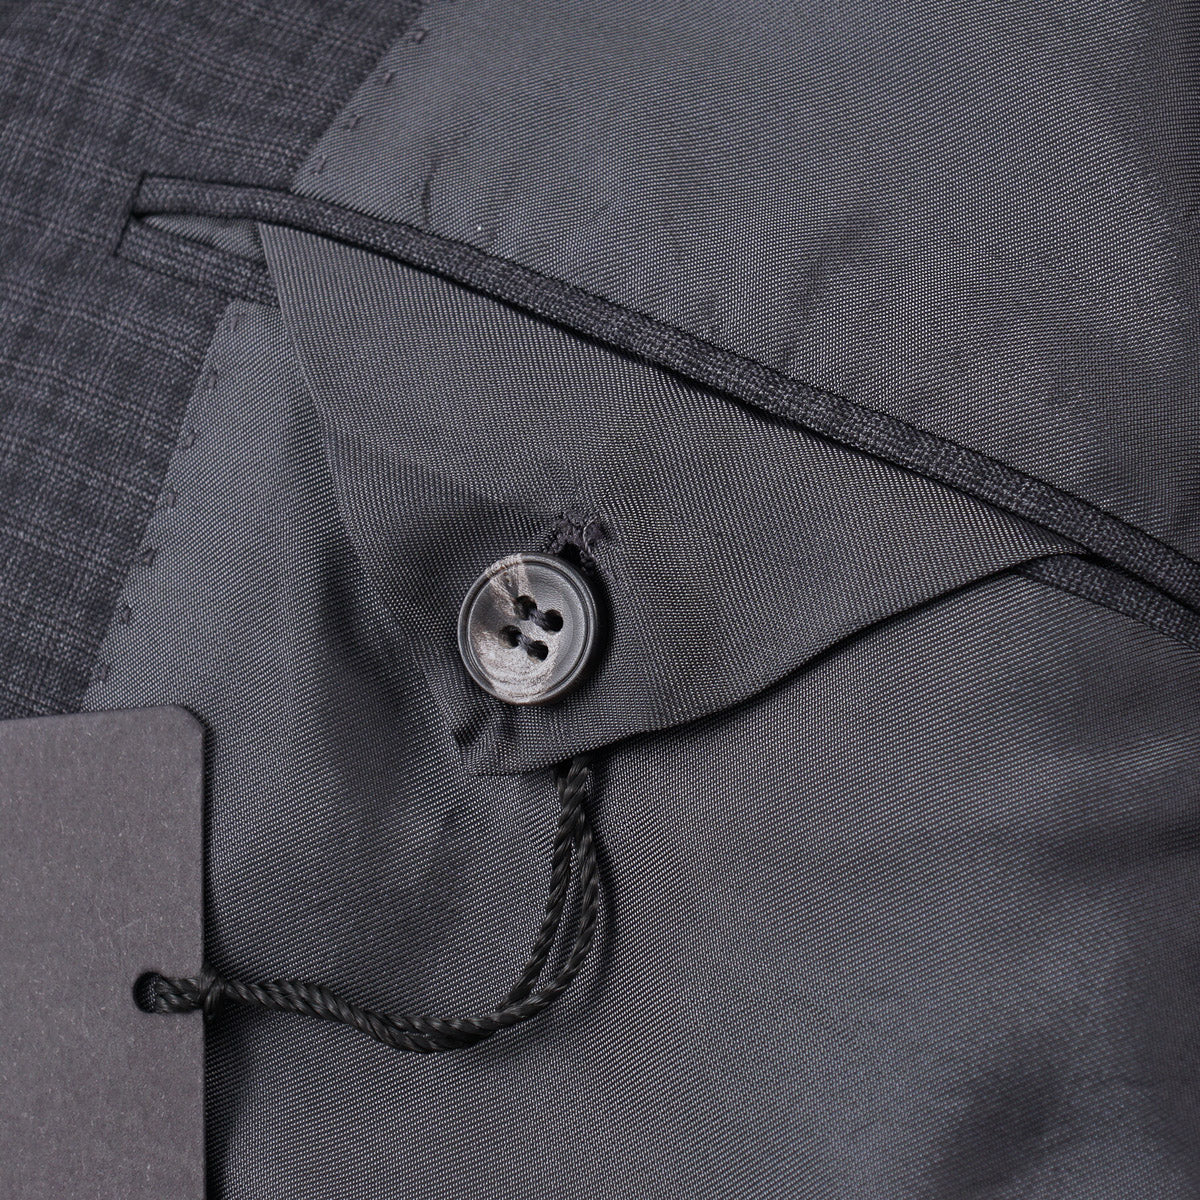 Sartorio Super 160s Wool Suit - Top Shelf Apparel